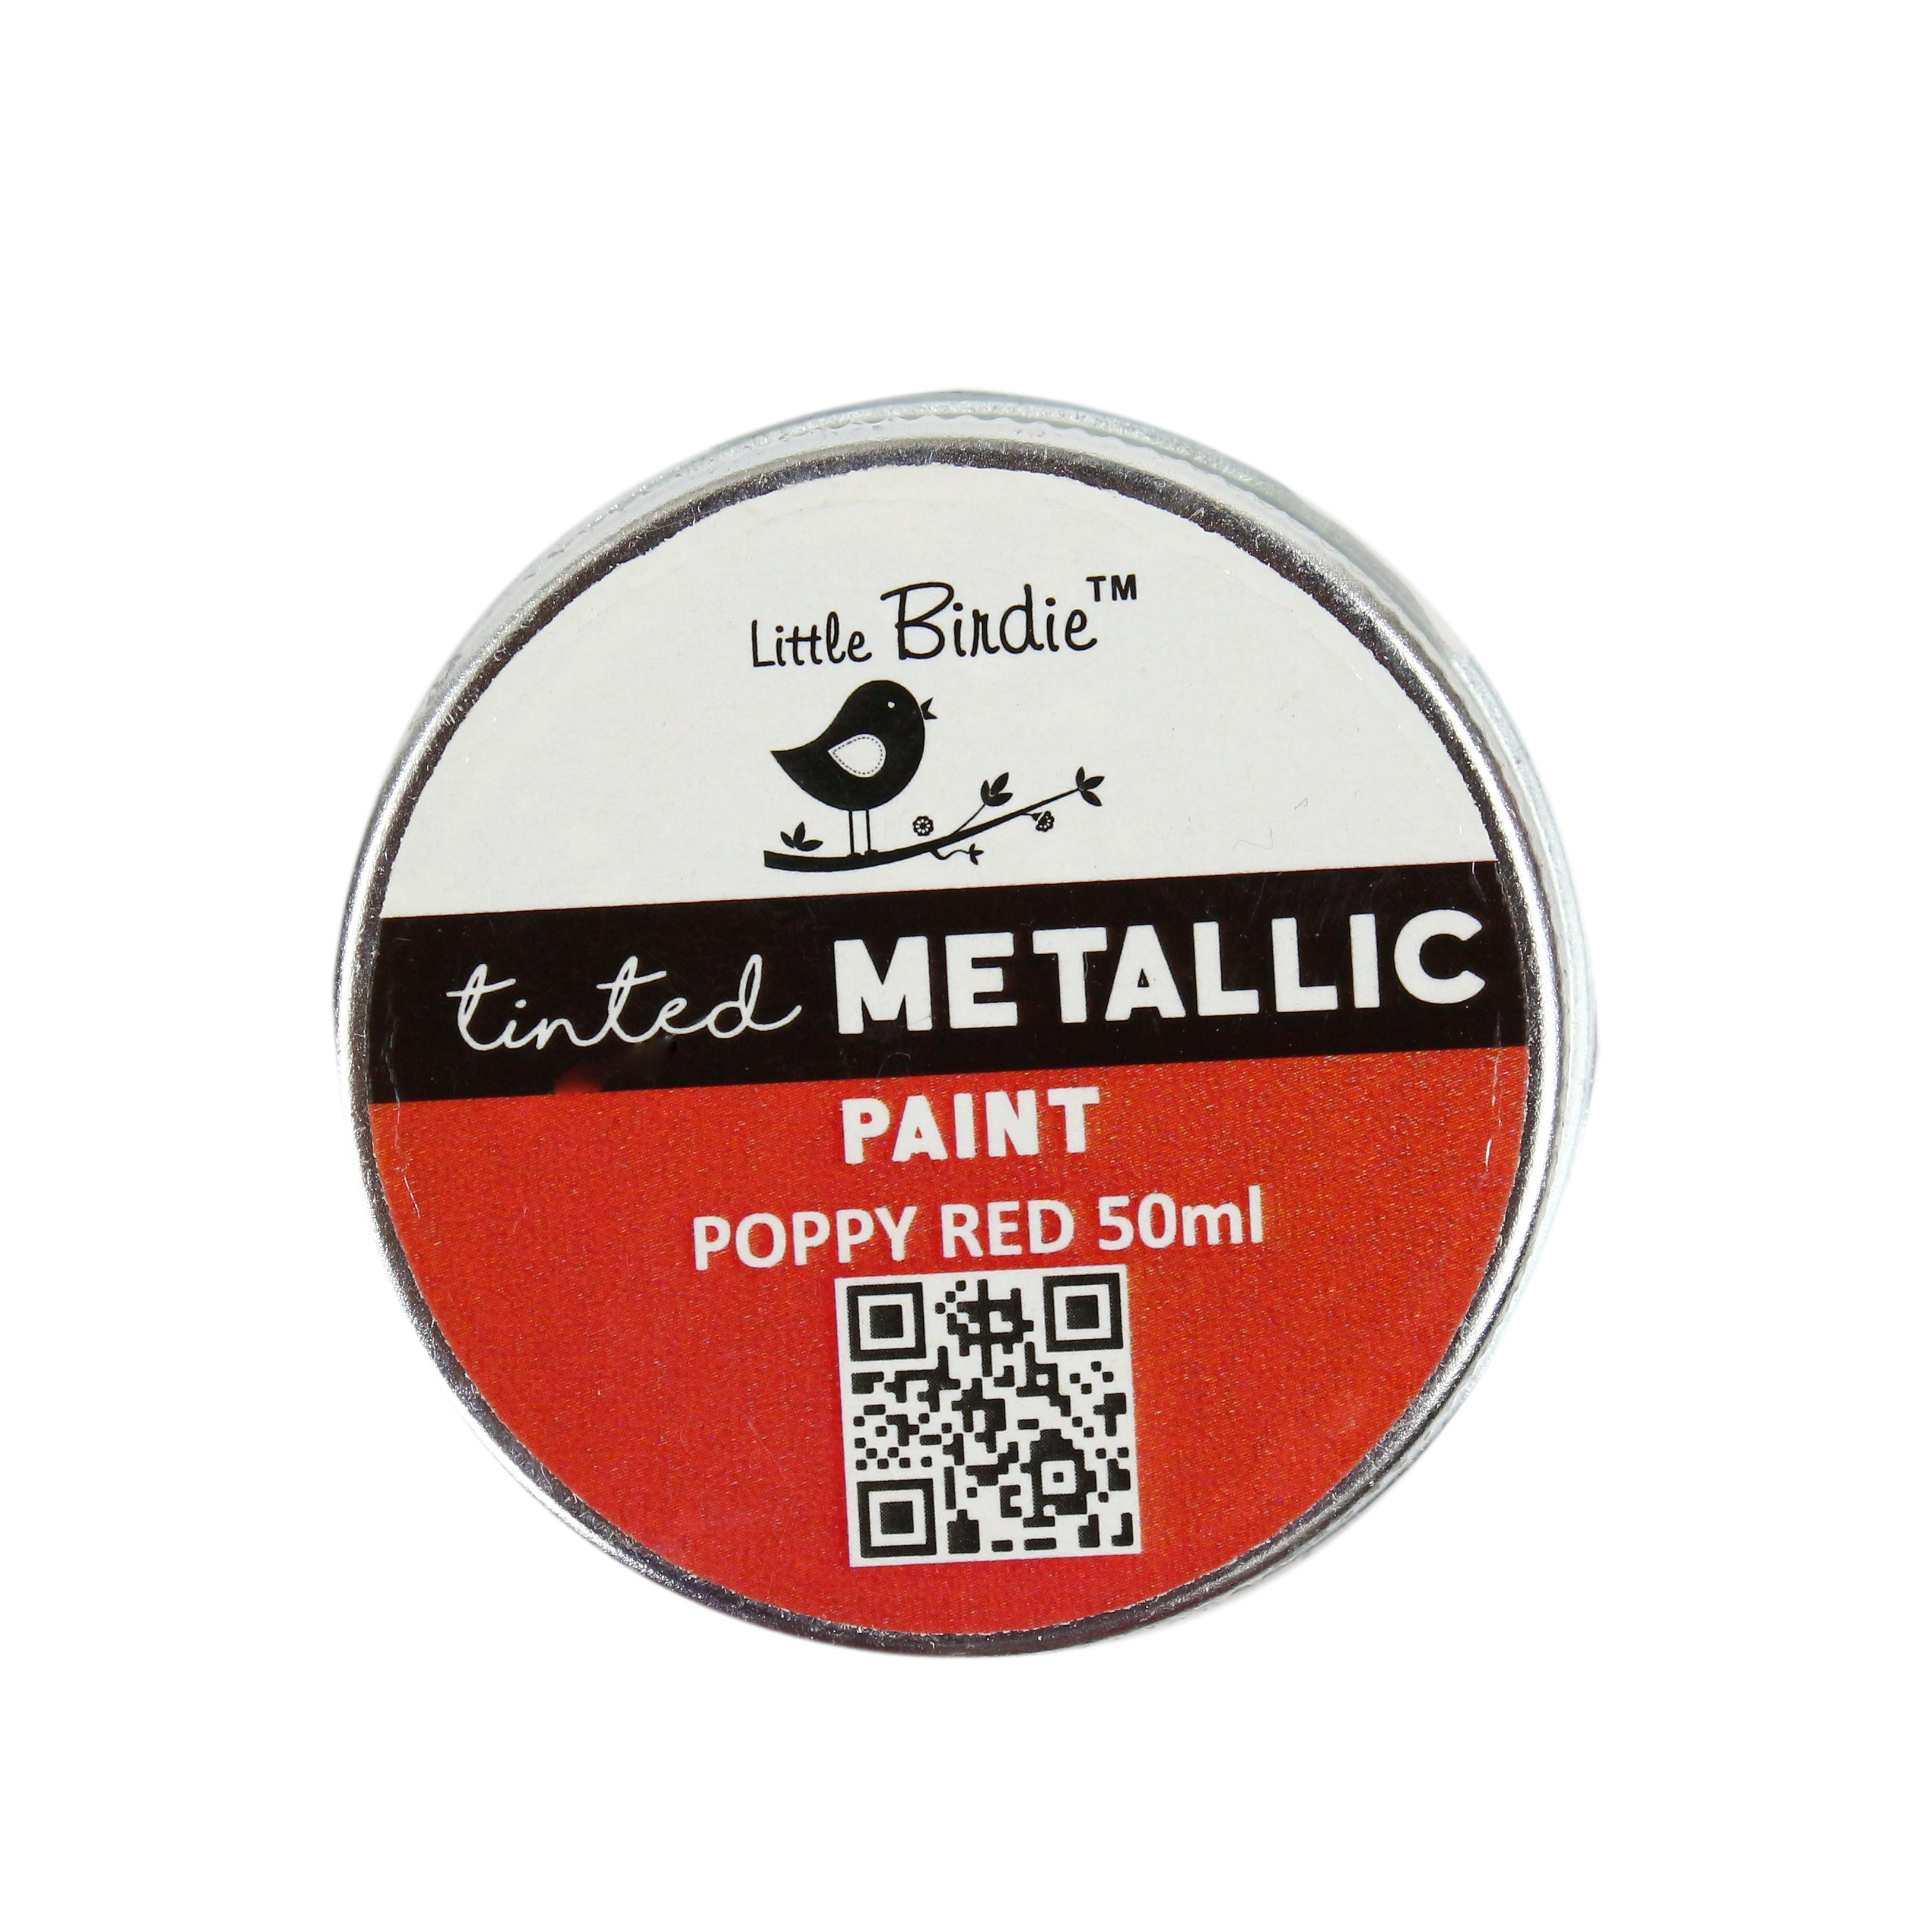 Tinted Metallic Paint Poppy Red 50Ml Bottle Lb - VC